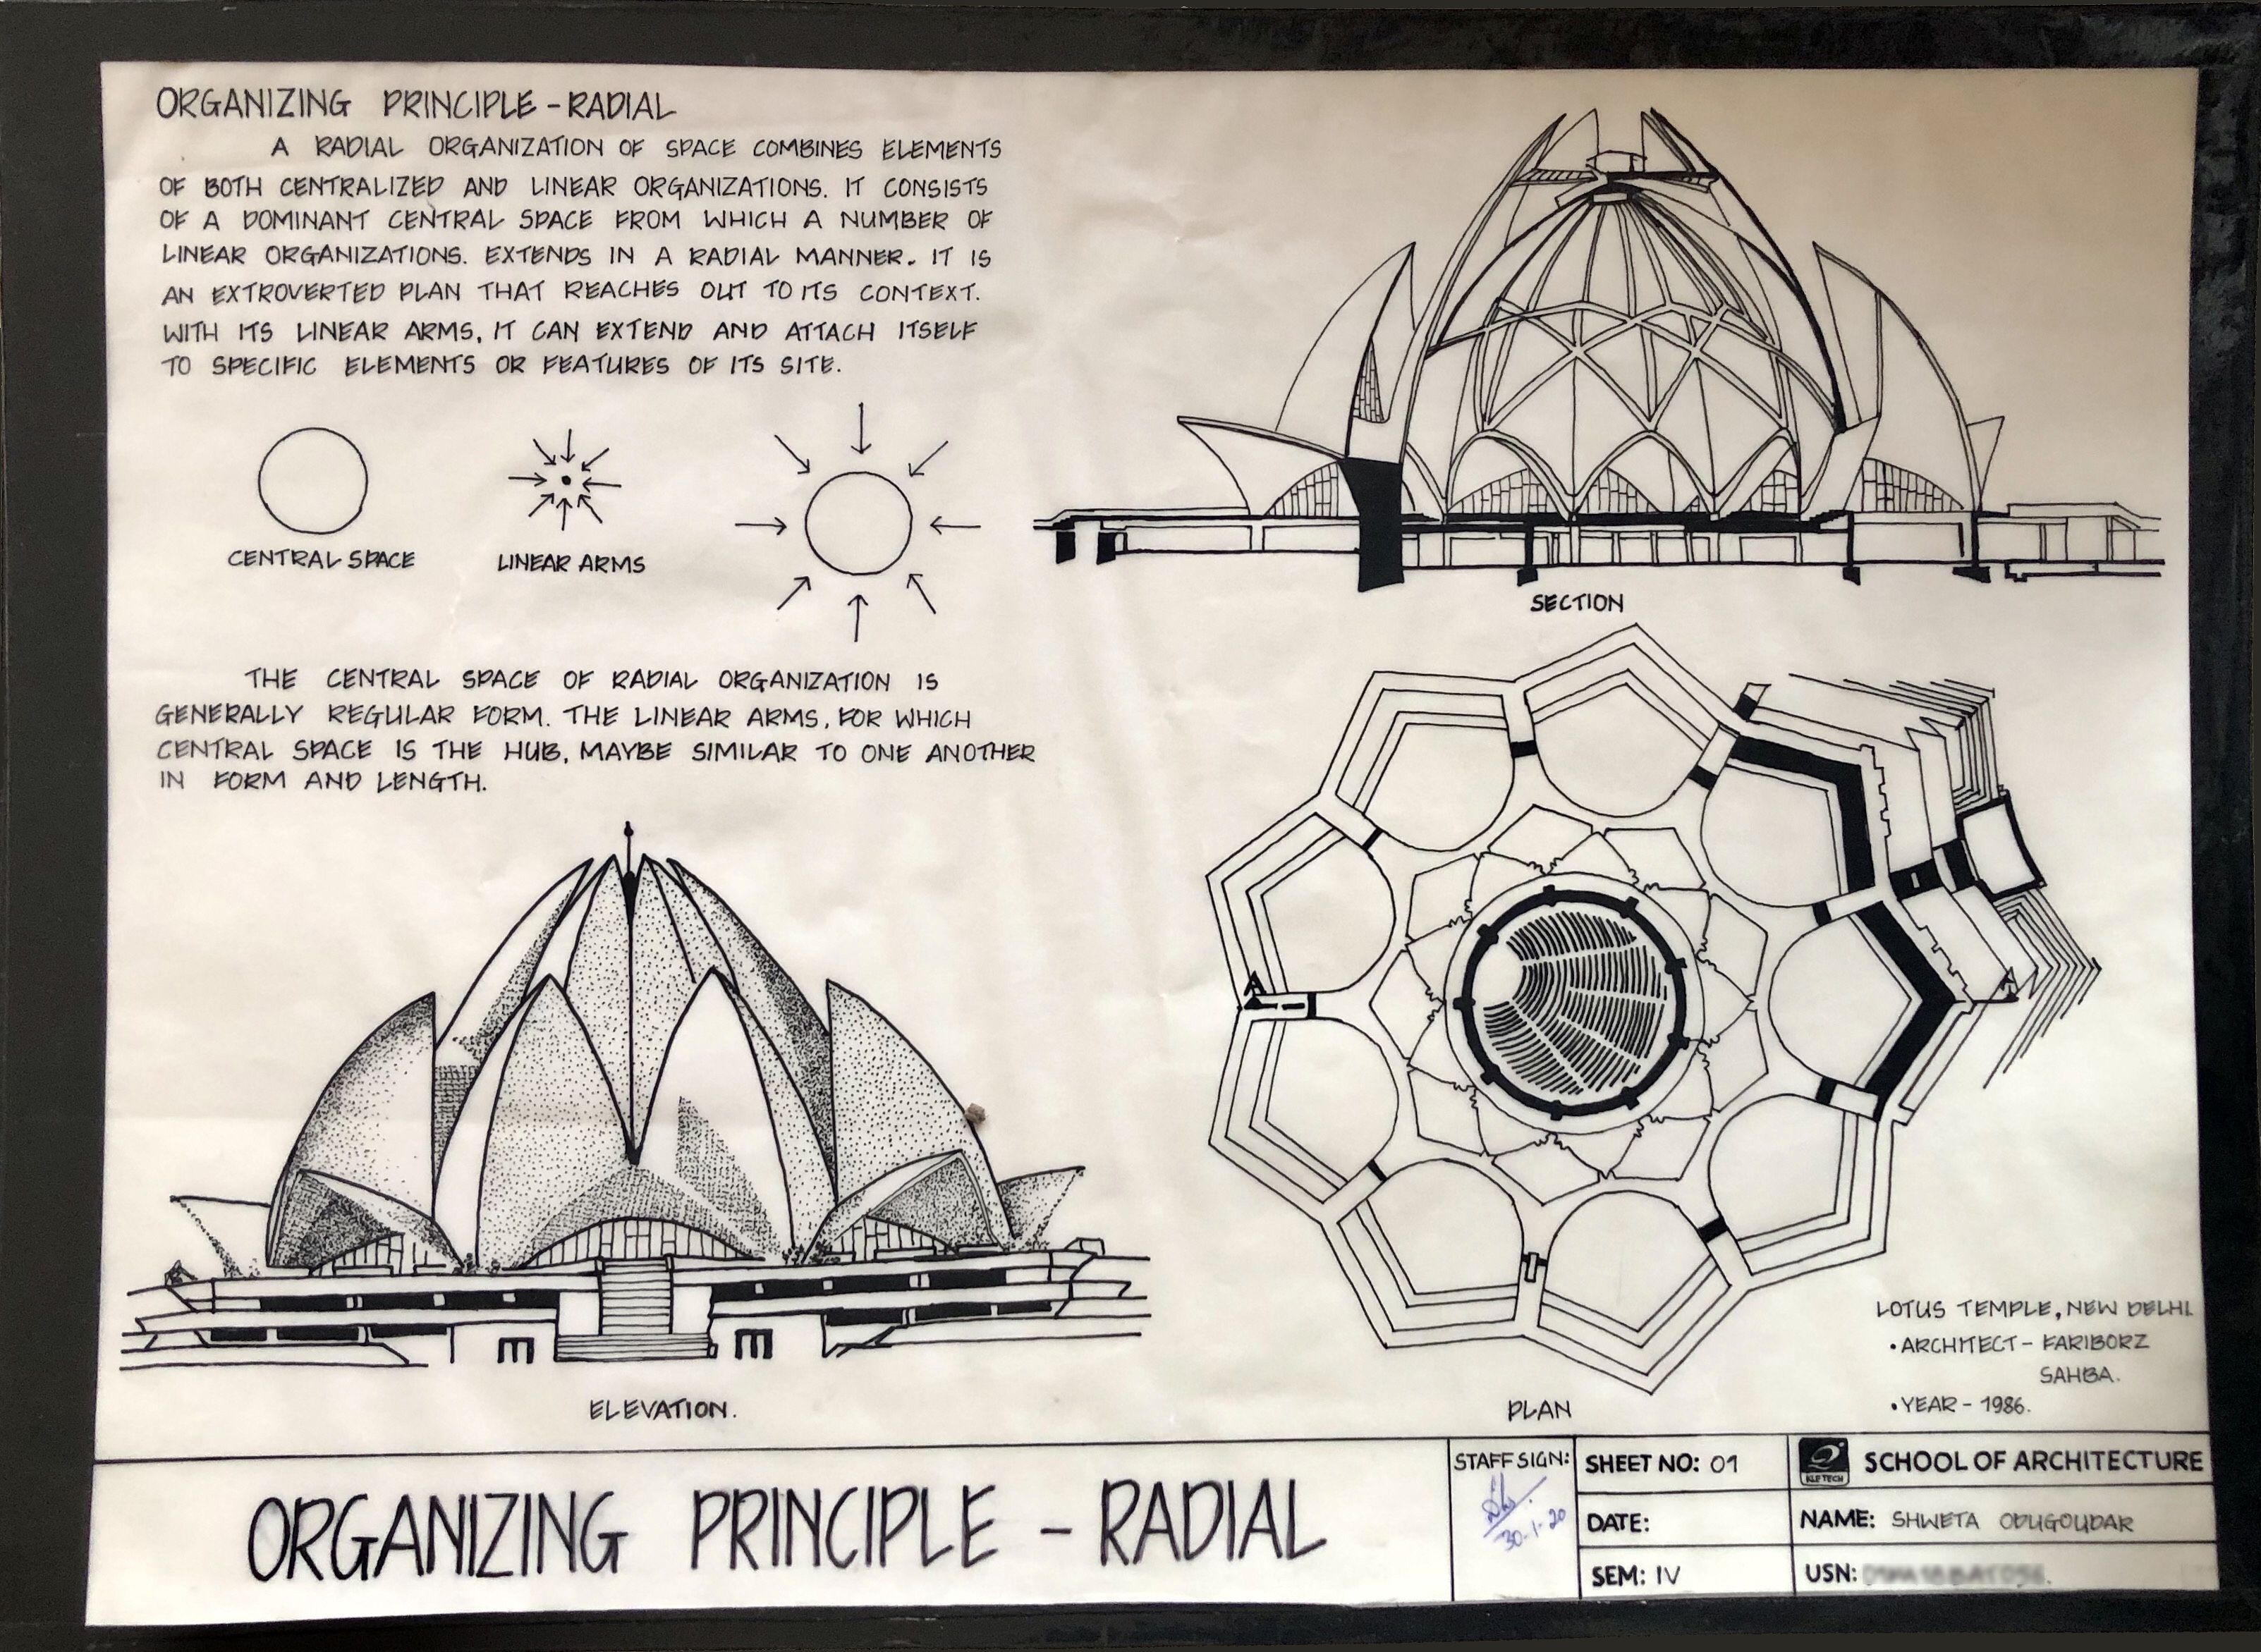  A design analysis of Lotus Temple, New Delhi